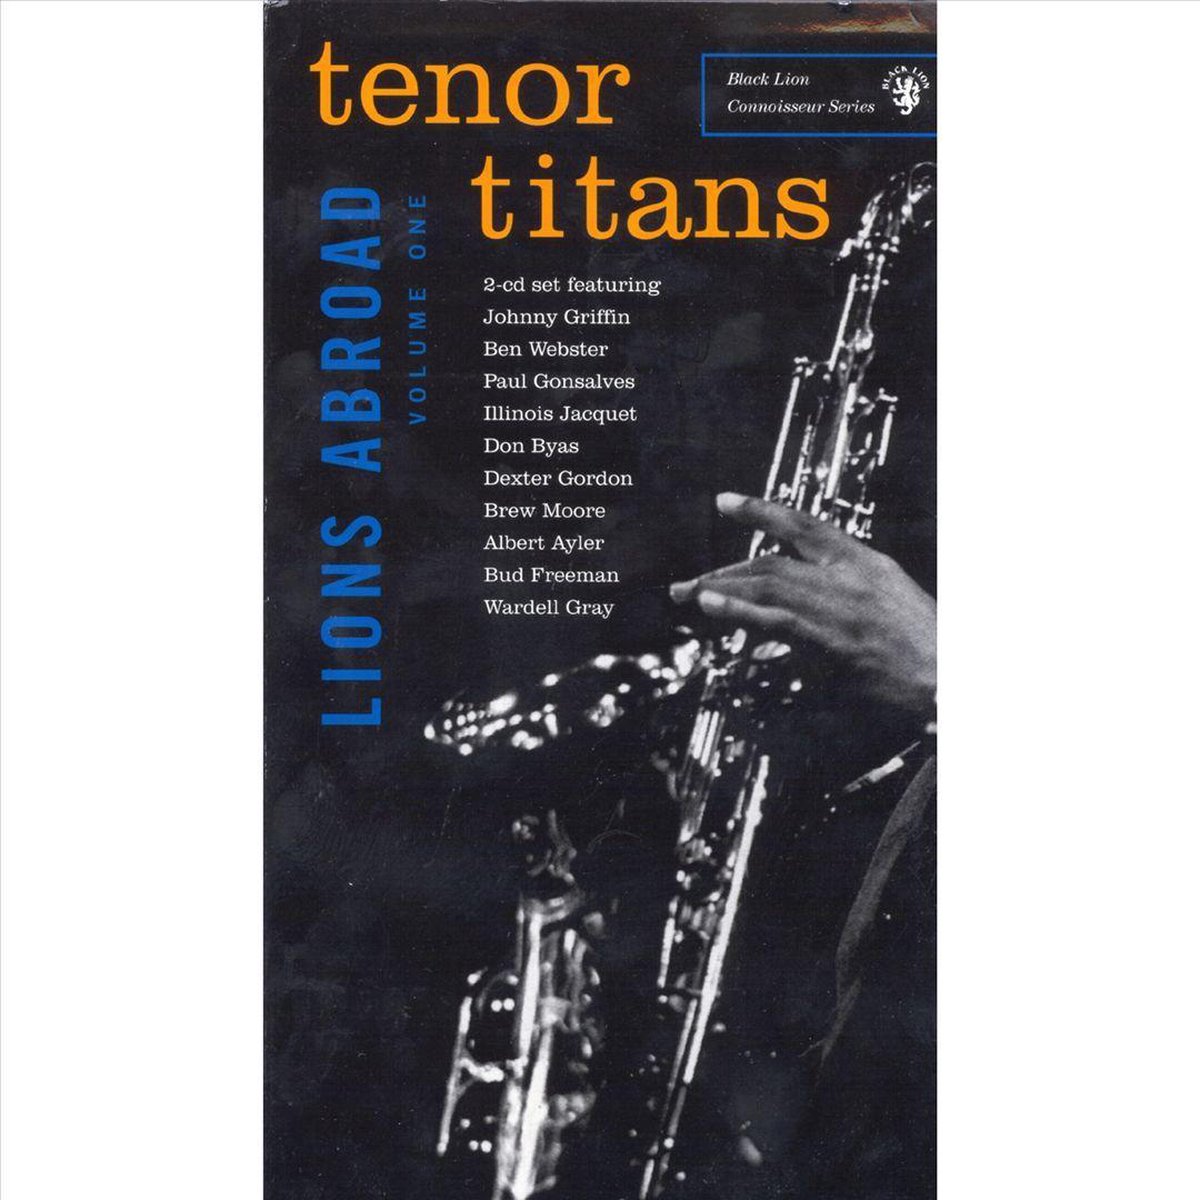 Tenor Titans: Lions Abroad, Vol. 1 - various artists